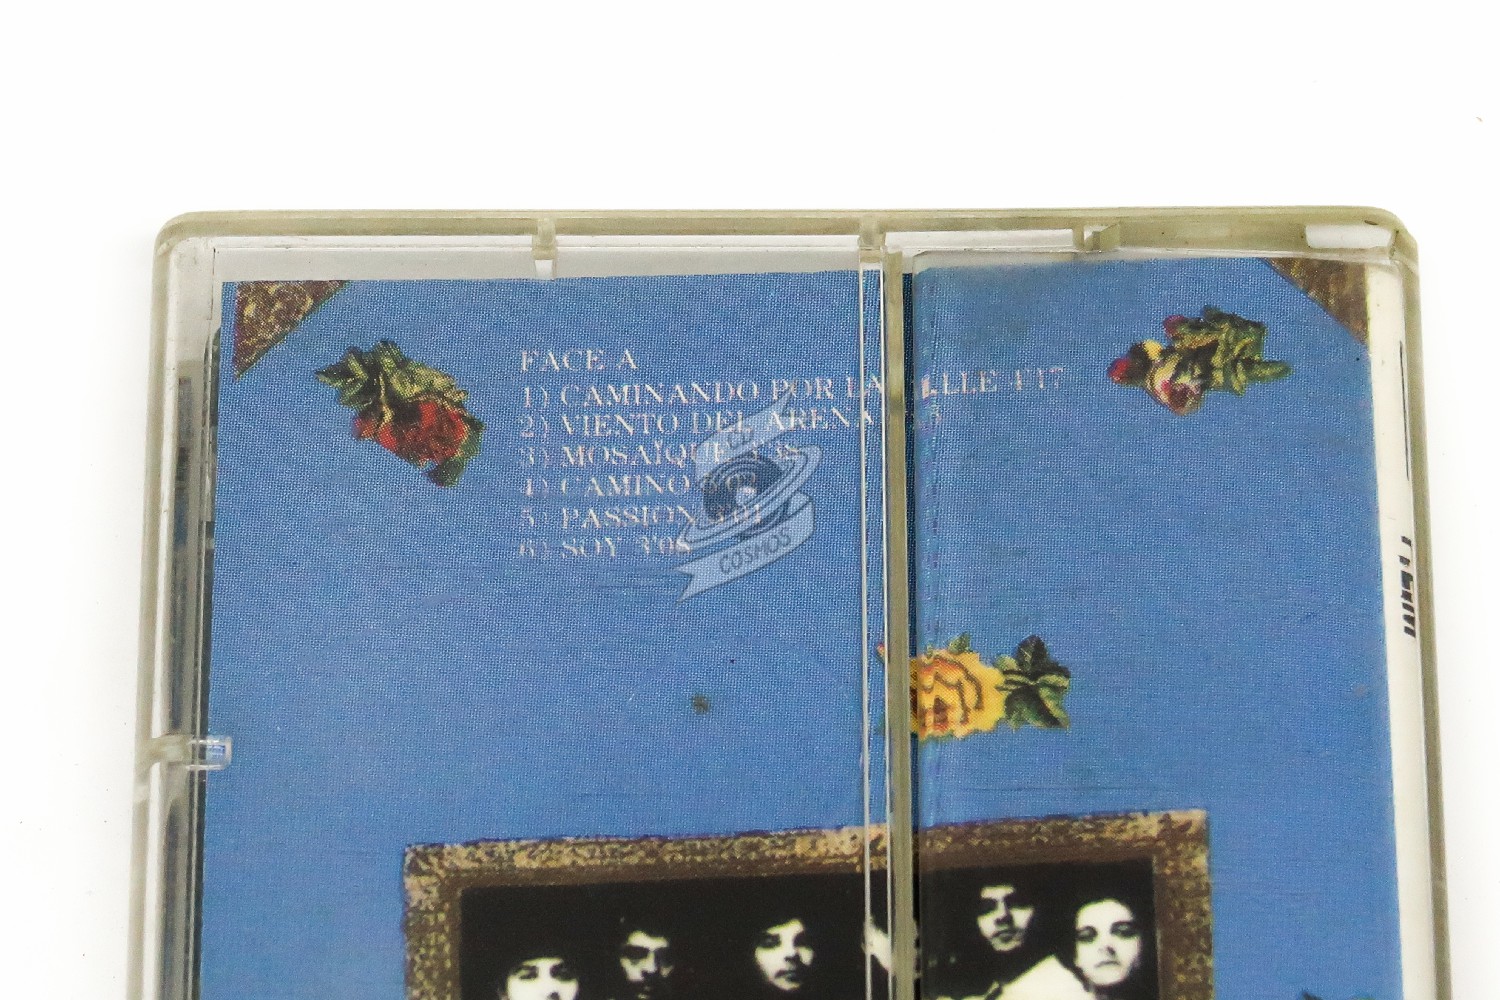 Gipsy Kings Mosaique (CD, Nov-1989, Elektra (Label)) Caminando Passion Soy  75596089227